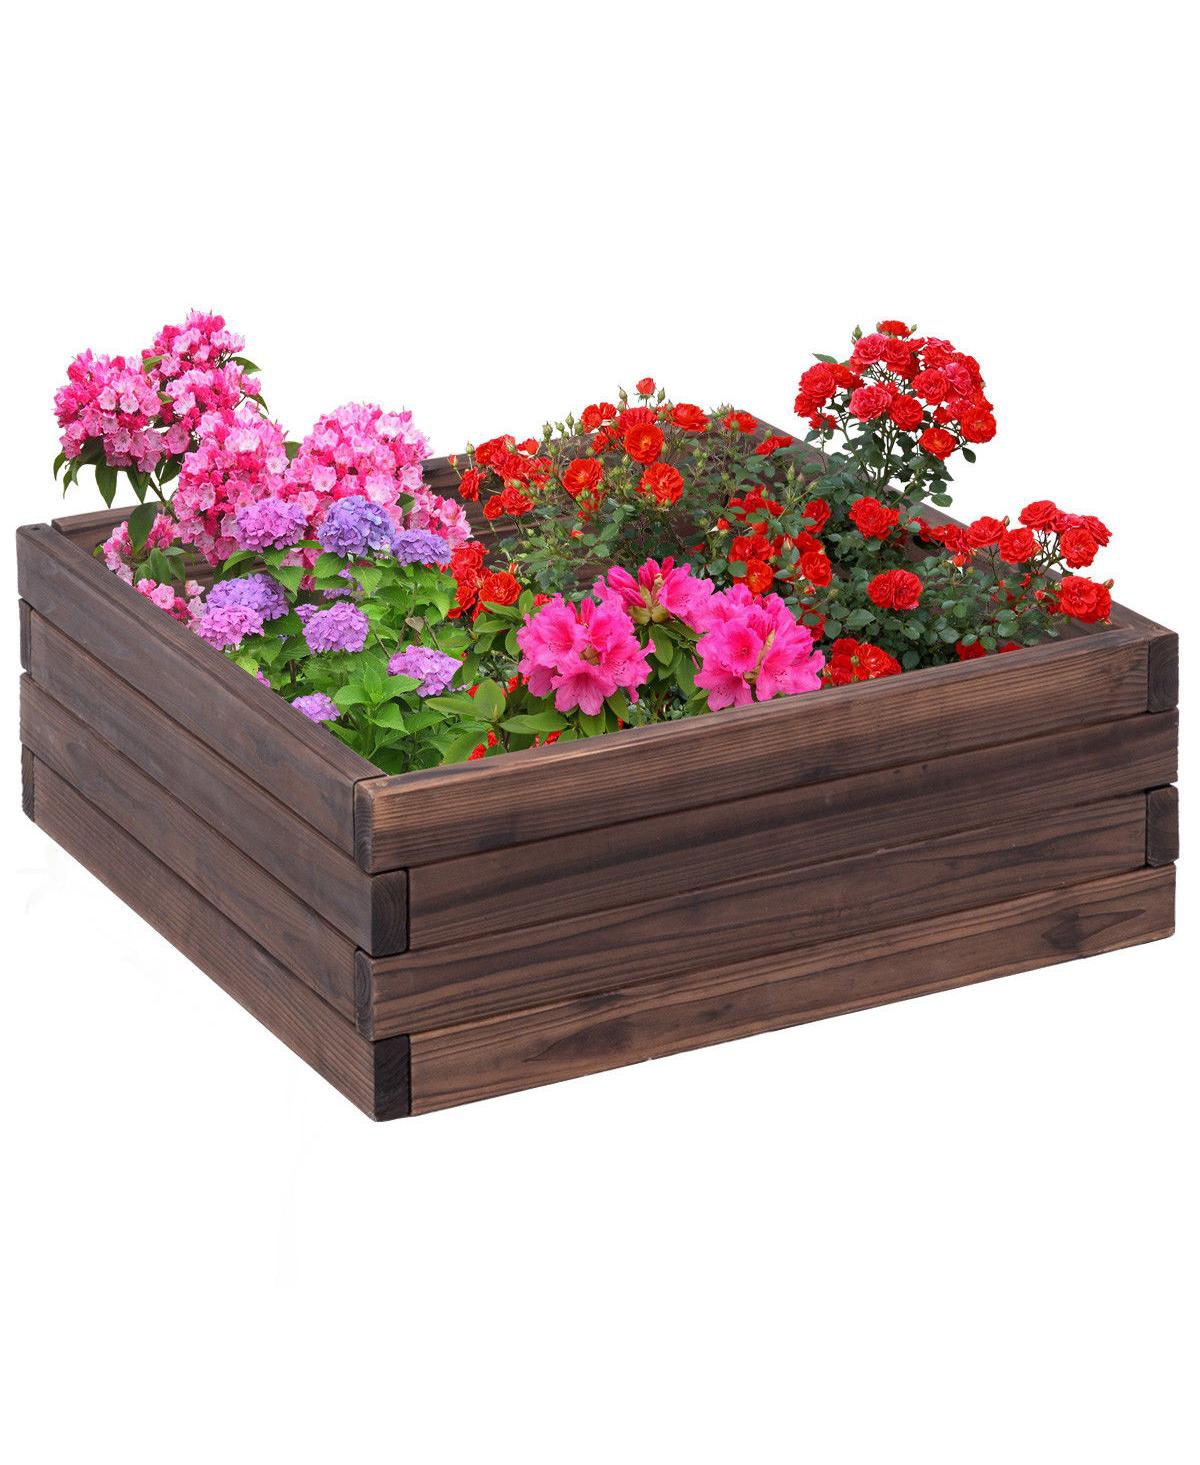 Square Raised Garden Bed Flower Vegetables Seeds Planter Kit Elevated Box - Brown